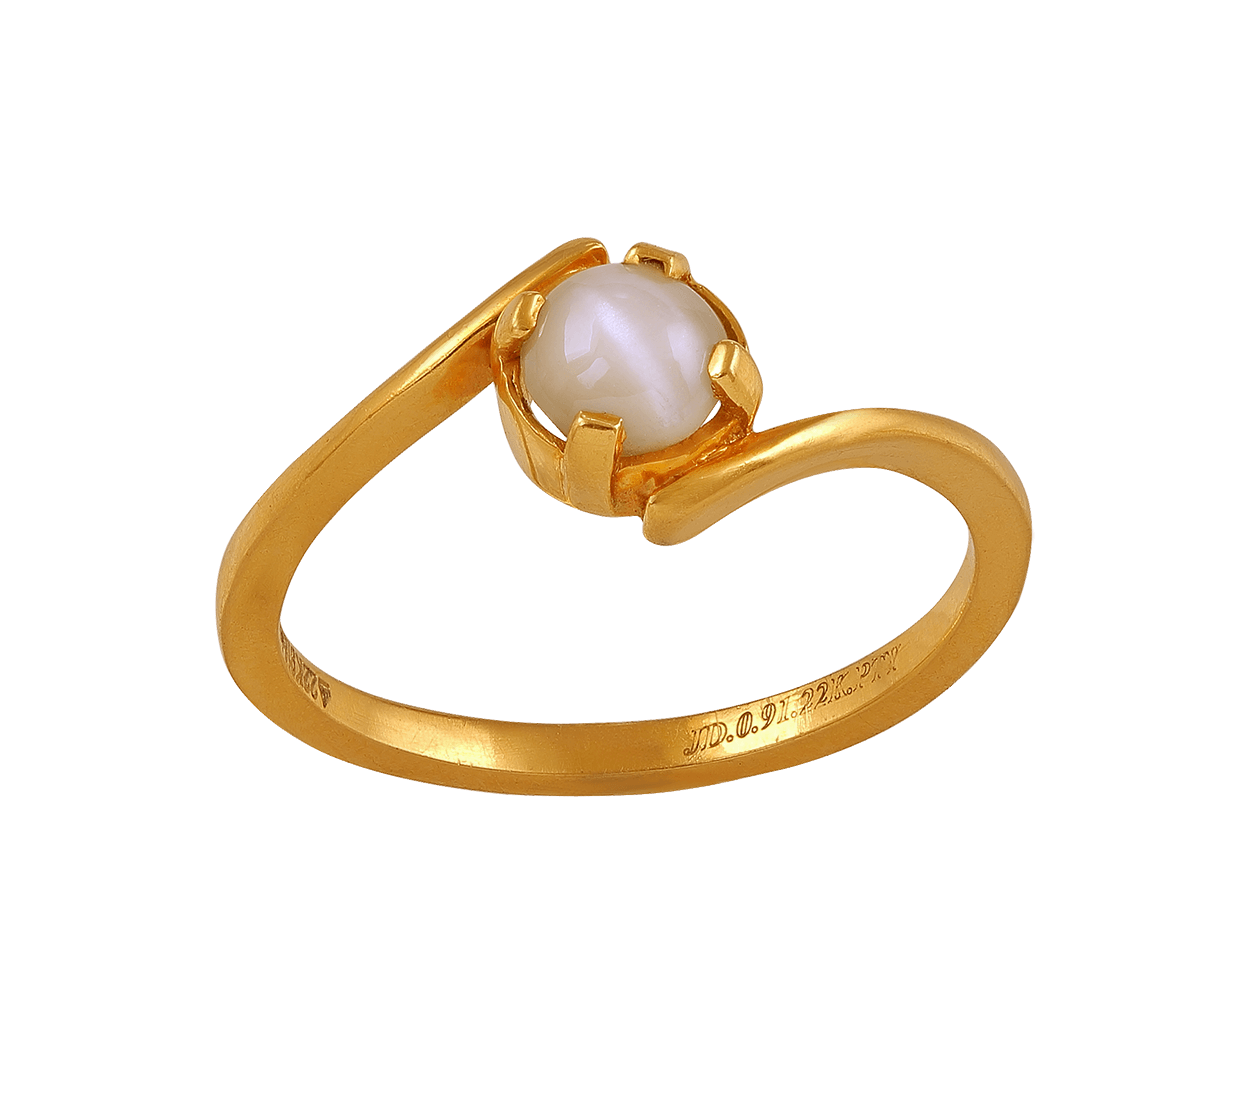 Vintage Inspired Pearl Ring - Zircon - Creative Crown Design - ApolloBox